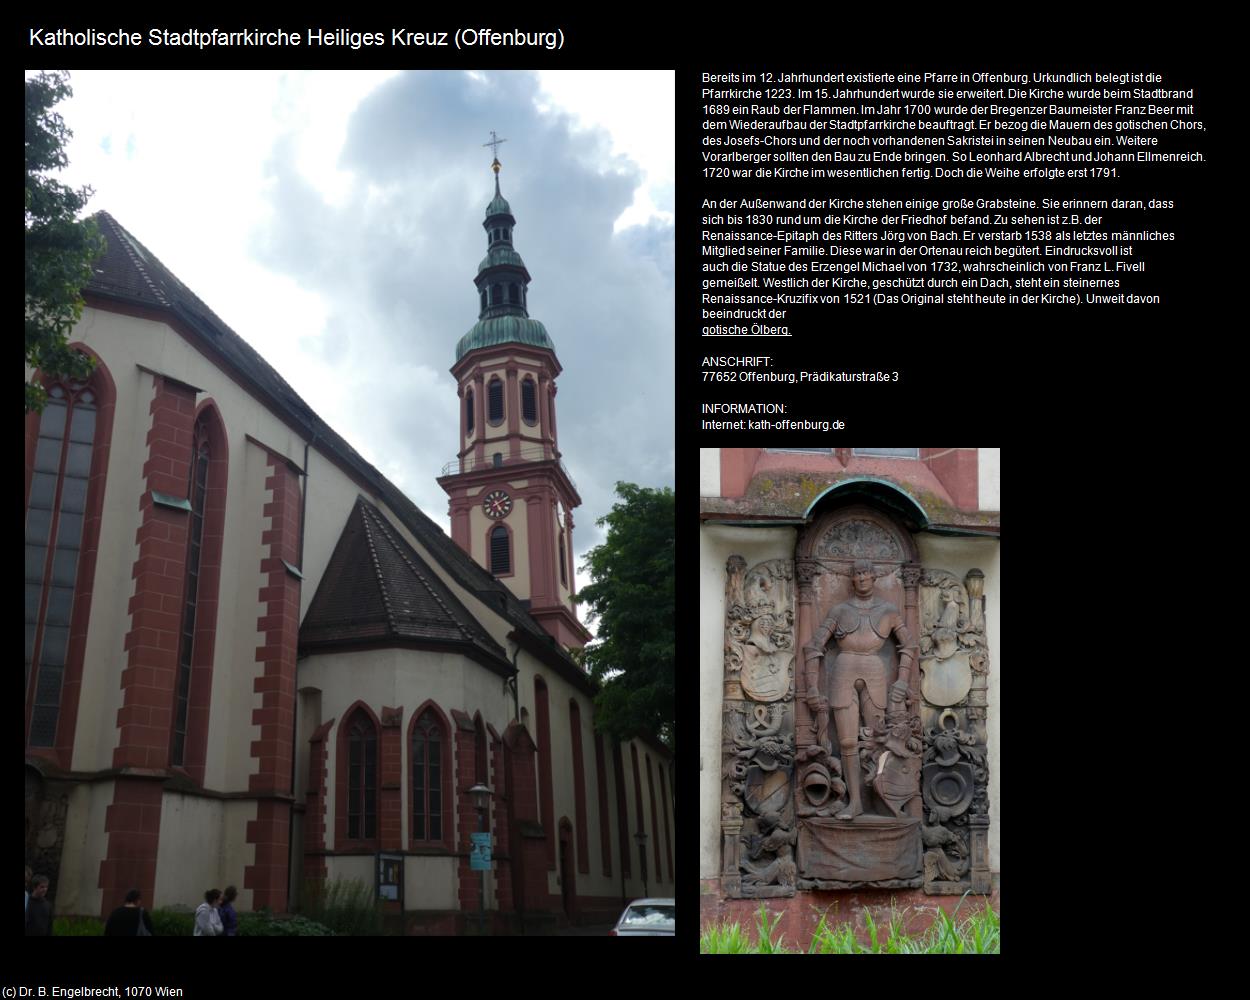 Rk. Stadtpfk. Heiliges Kreuz (Offenburg) in Kulturatlas-BADEN-WÜRTTEMBERG(c)B.Engelbrecht